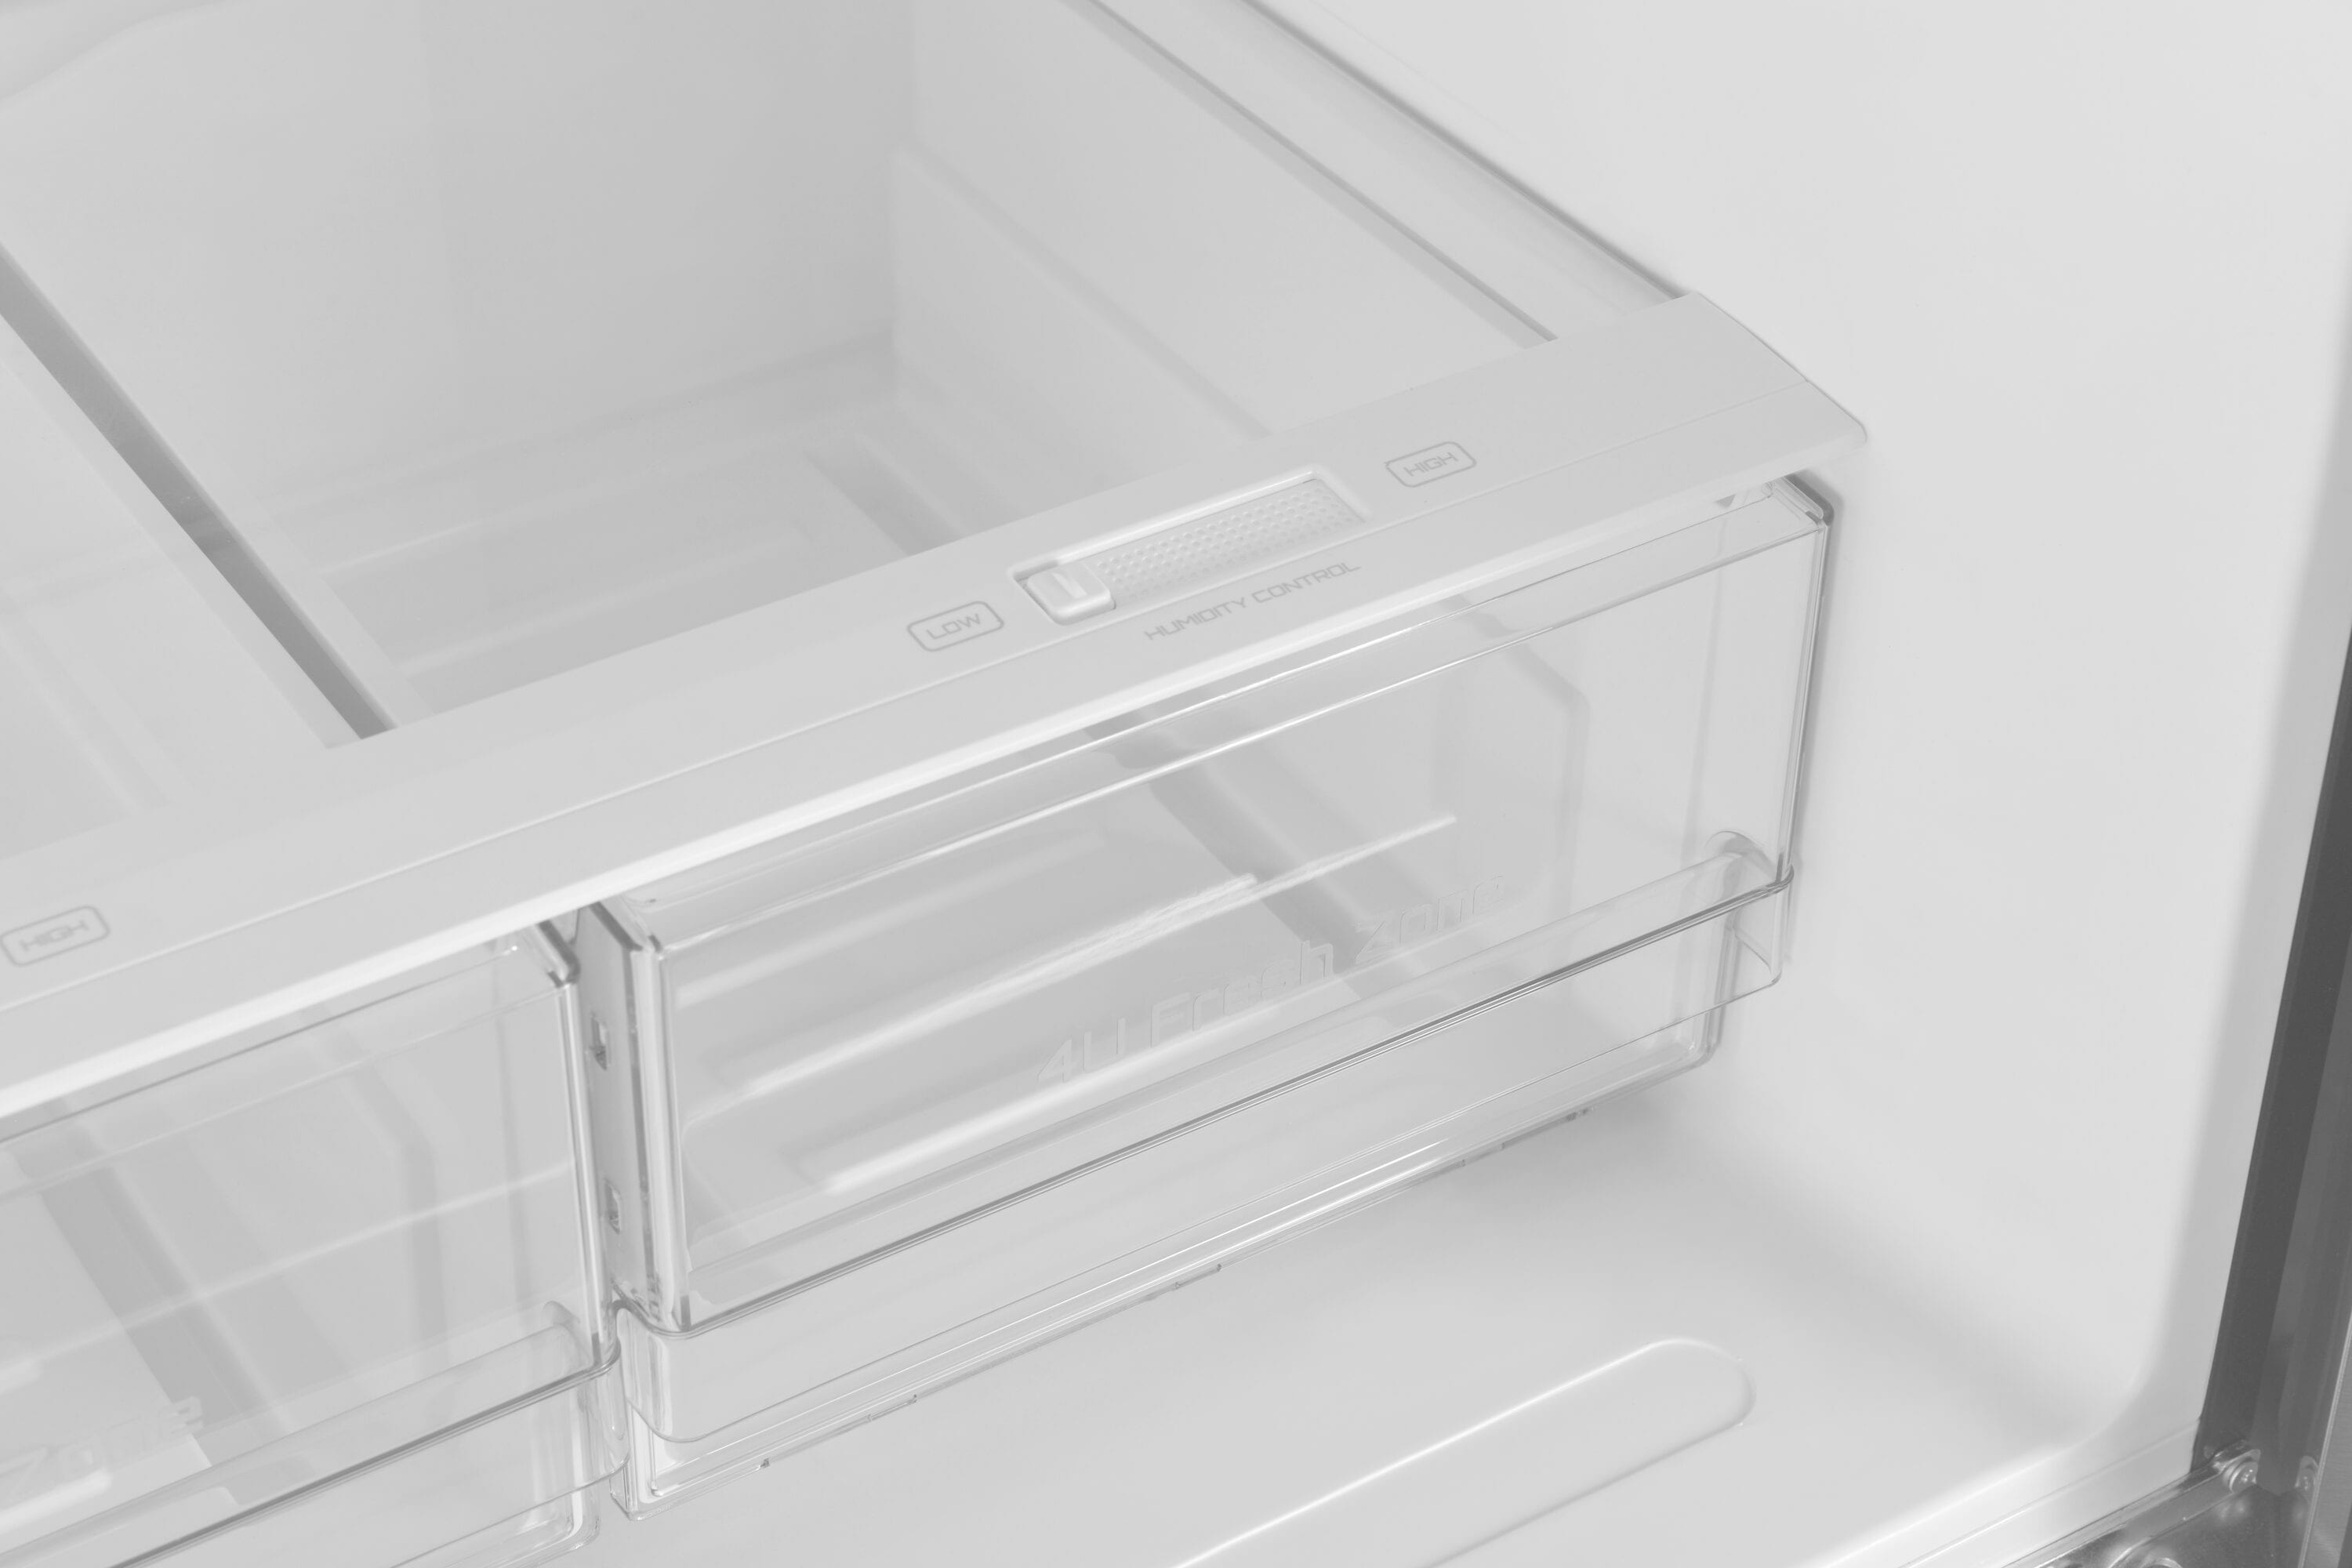 Galanz 18-cu ft Counter-depth Built-In French Door Refrigerator